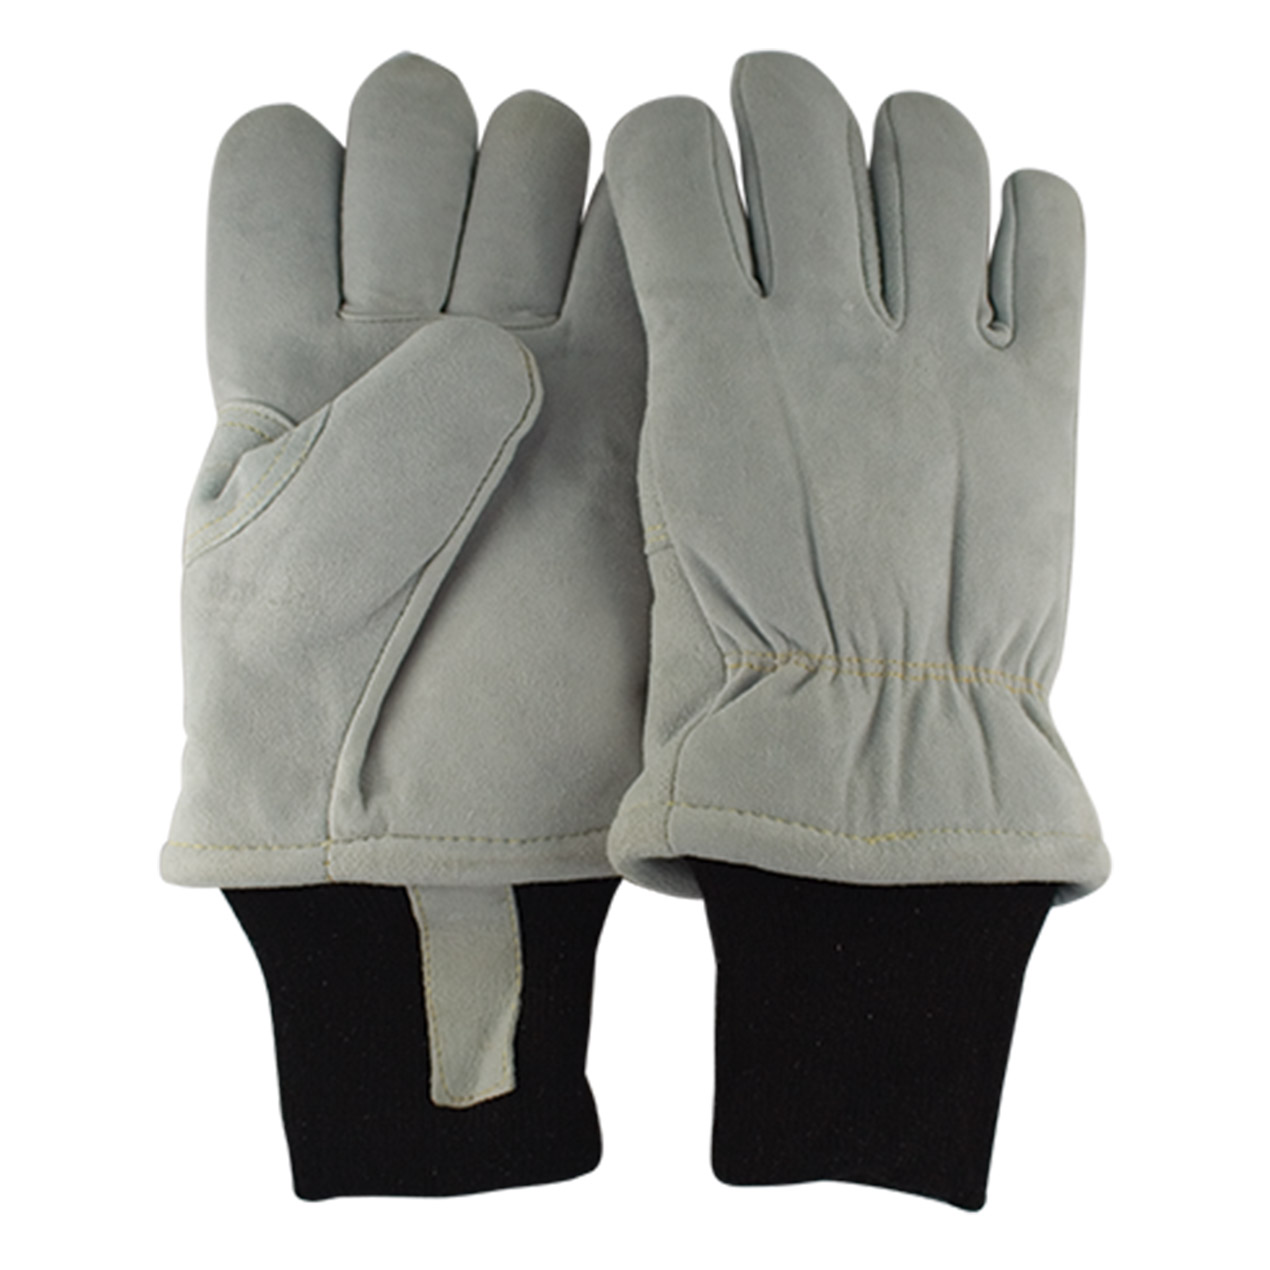 http://www.freezerwear.com/Shared/Images/Product/200-203-Goatskin-Freezer-Glove-Pair/Samco_gloves_200-203.jpg